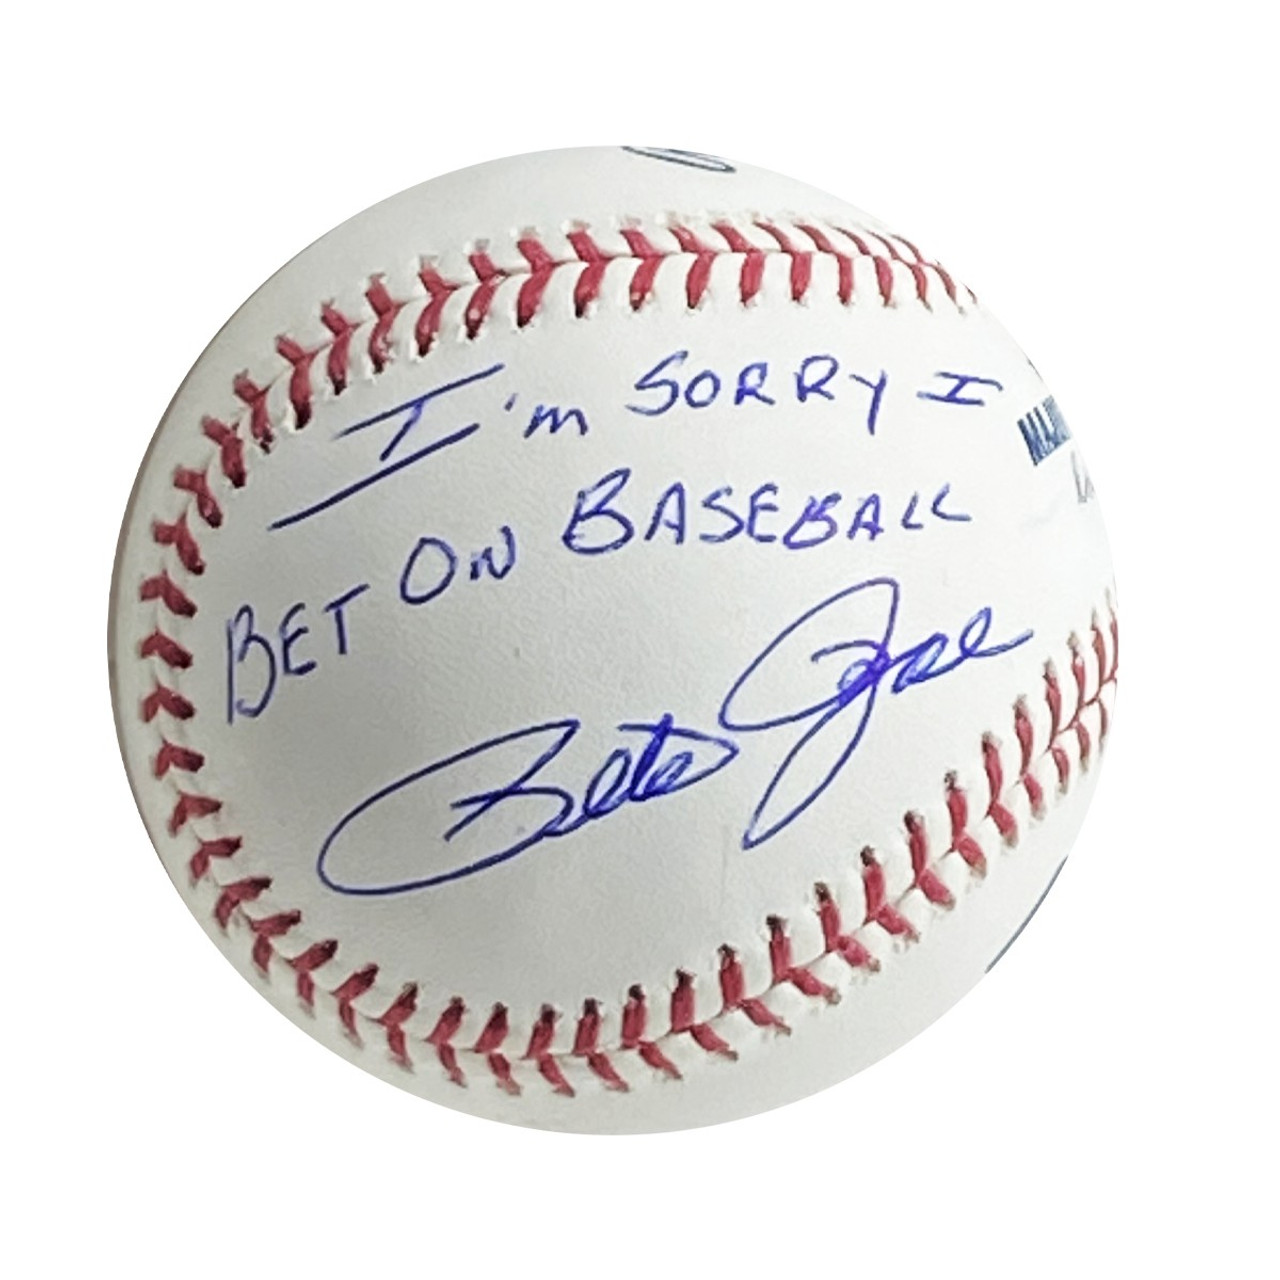 Pete Rose Autographed Rawlings Major Leage Baseball I'm Sorry I